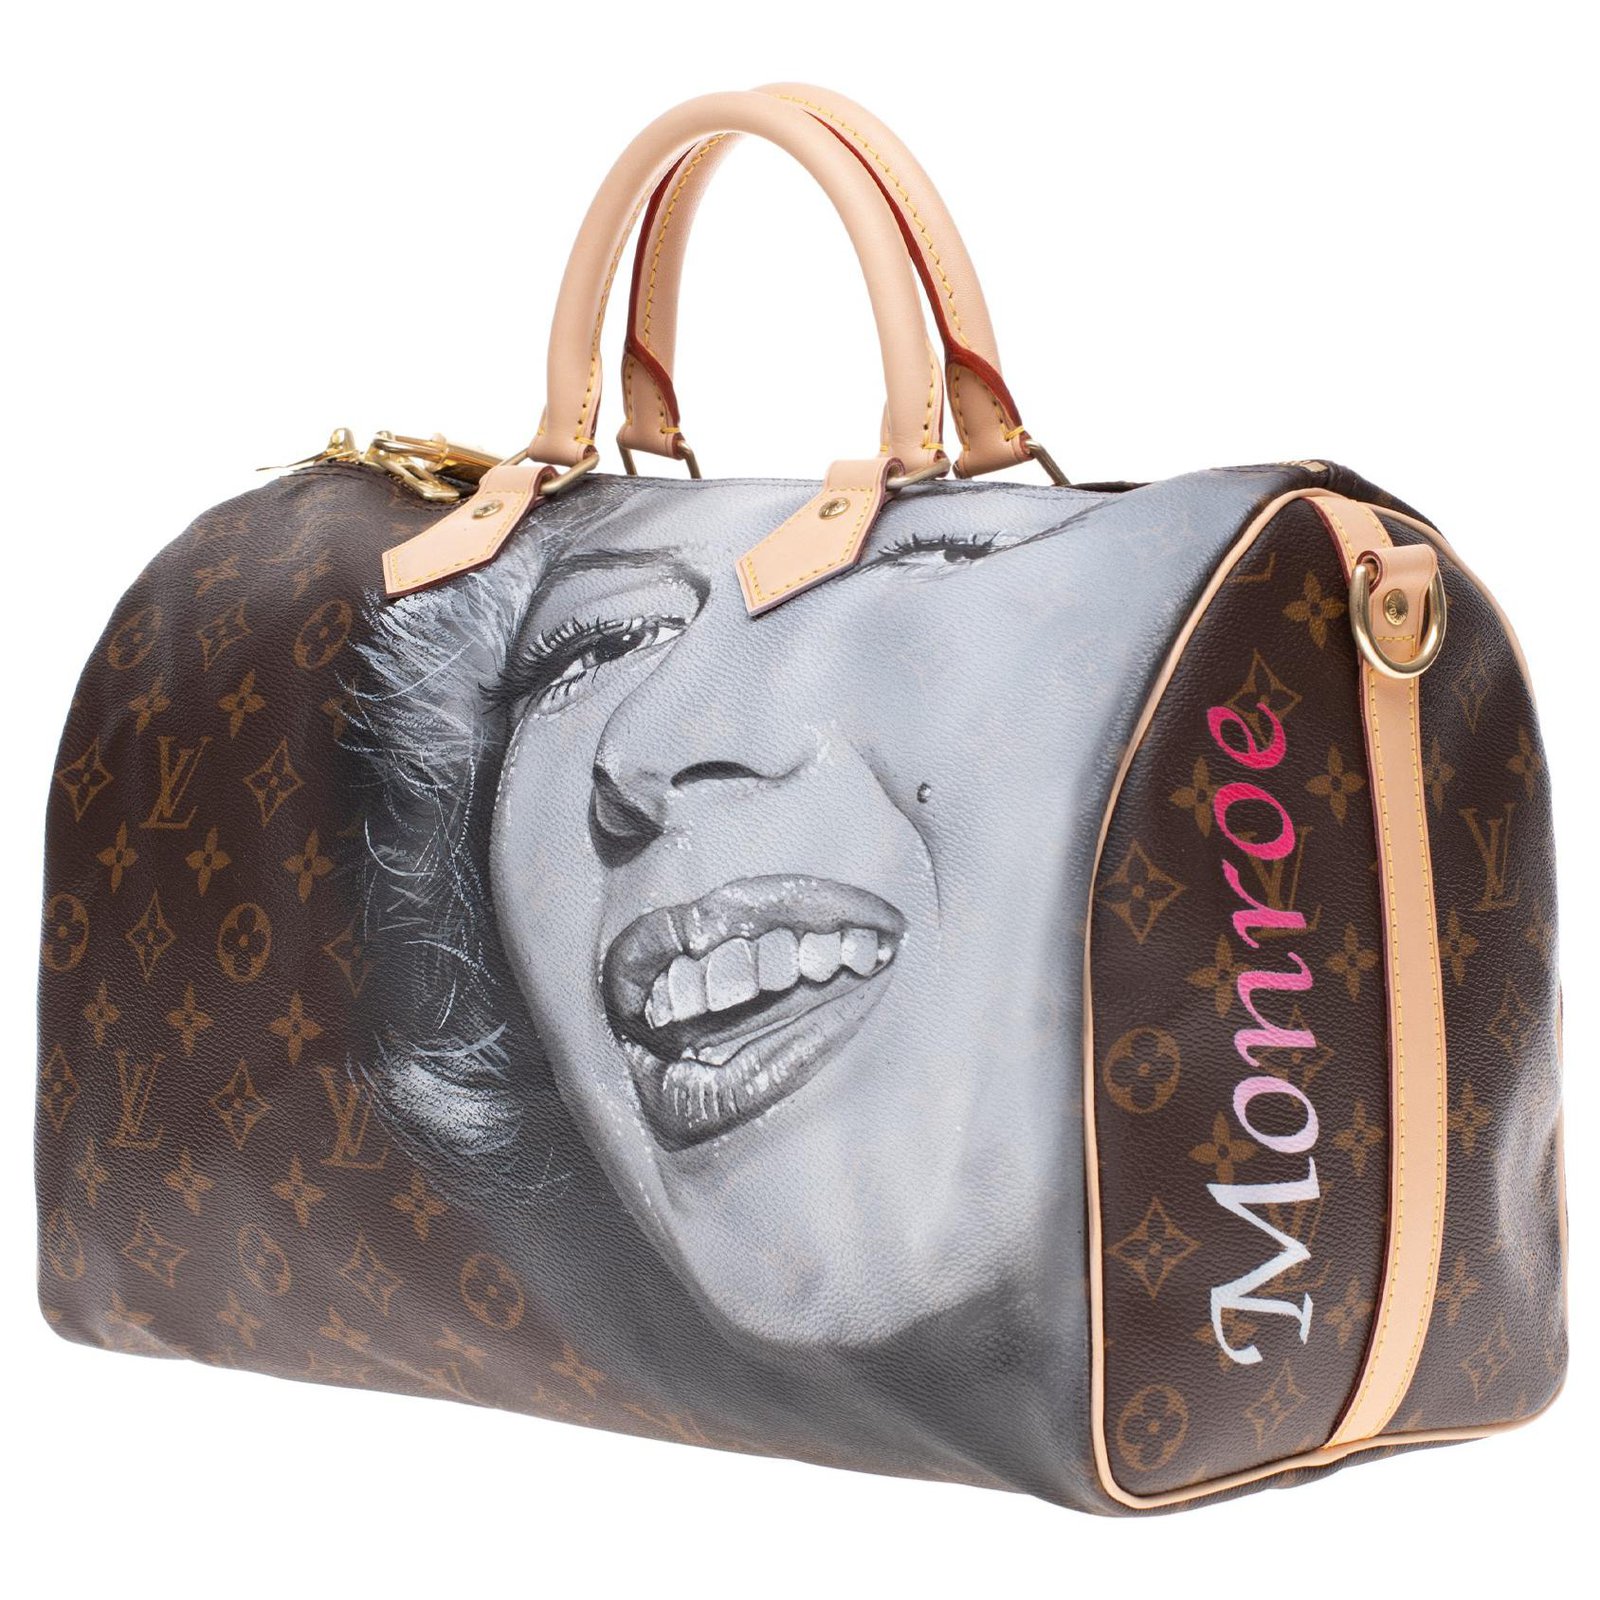 Customized Louis Vuitton Speedy 35 Marilyn Monroe handbag in Monogram  canvas